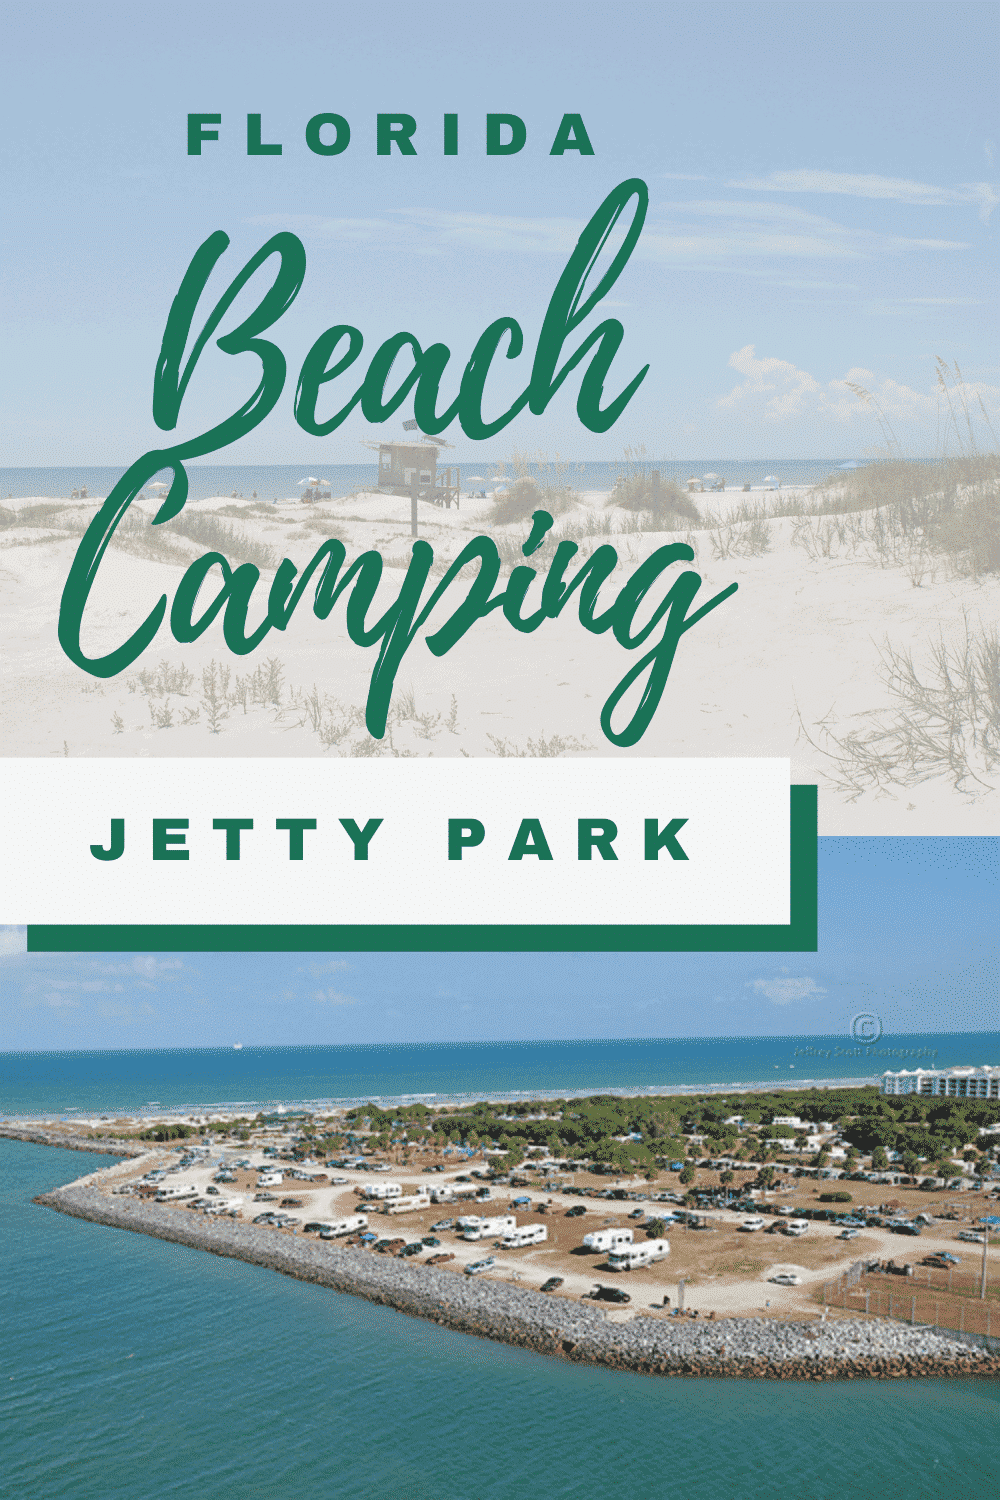 florida beach camping jetty park